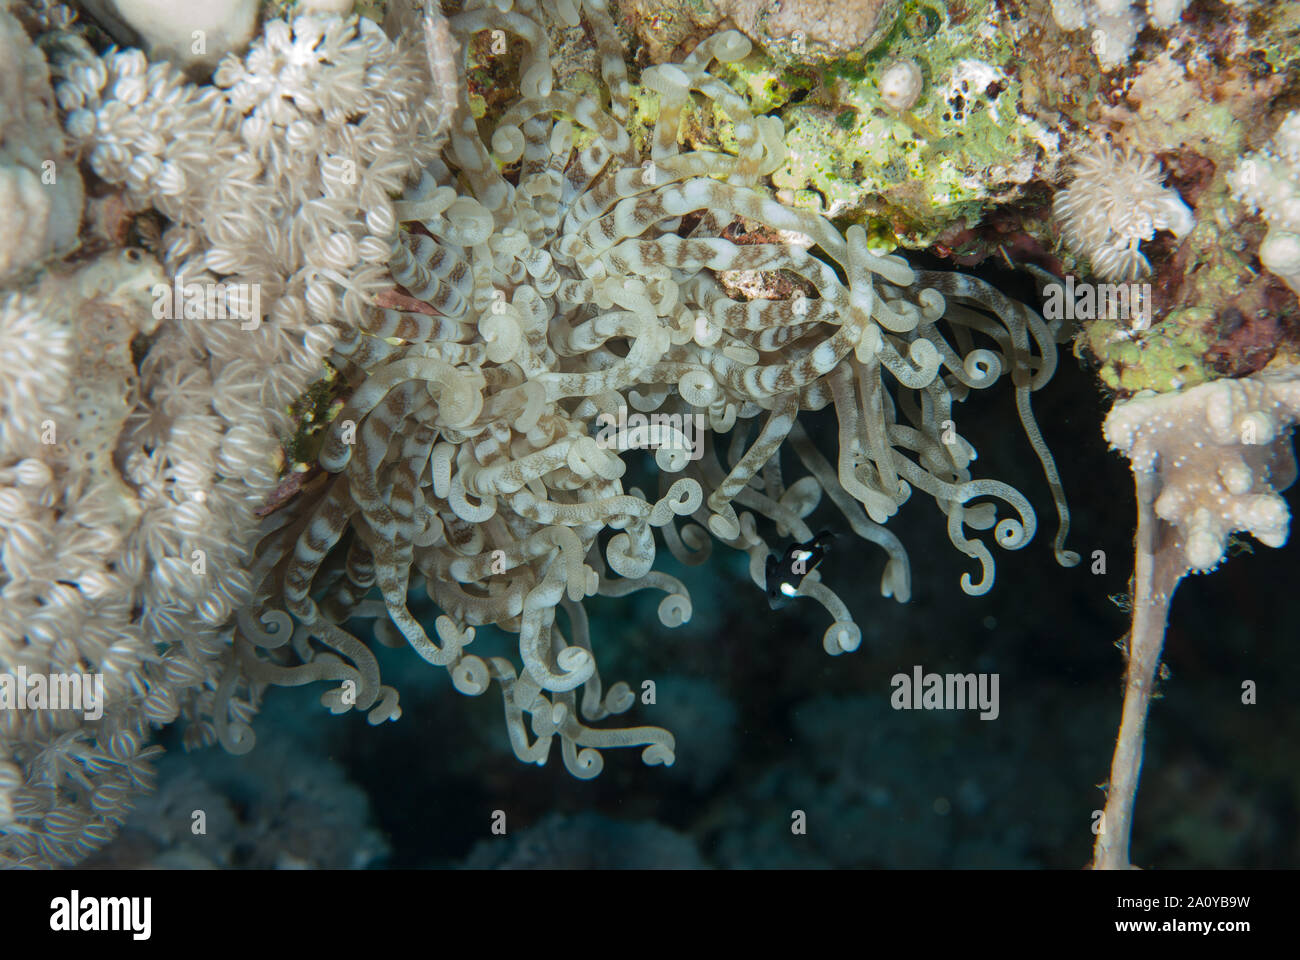 Bordato anemone, Heteractis aurora, Stichodactylidae, Sharm el Sheikh Mar Rosso, Egitto Foto Stock